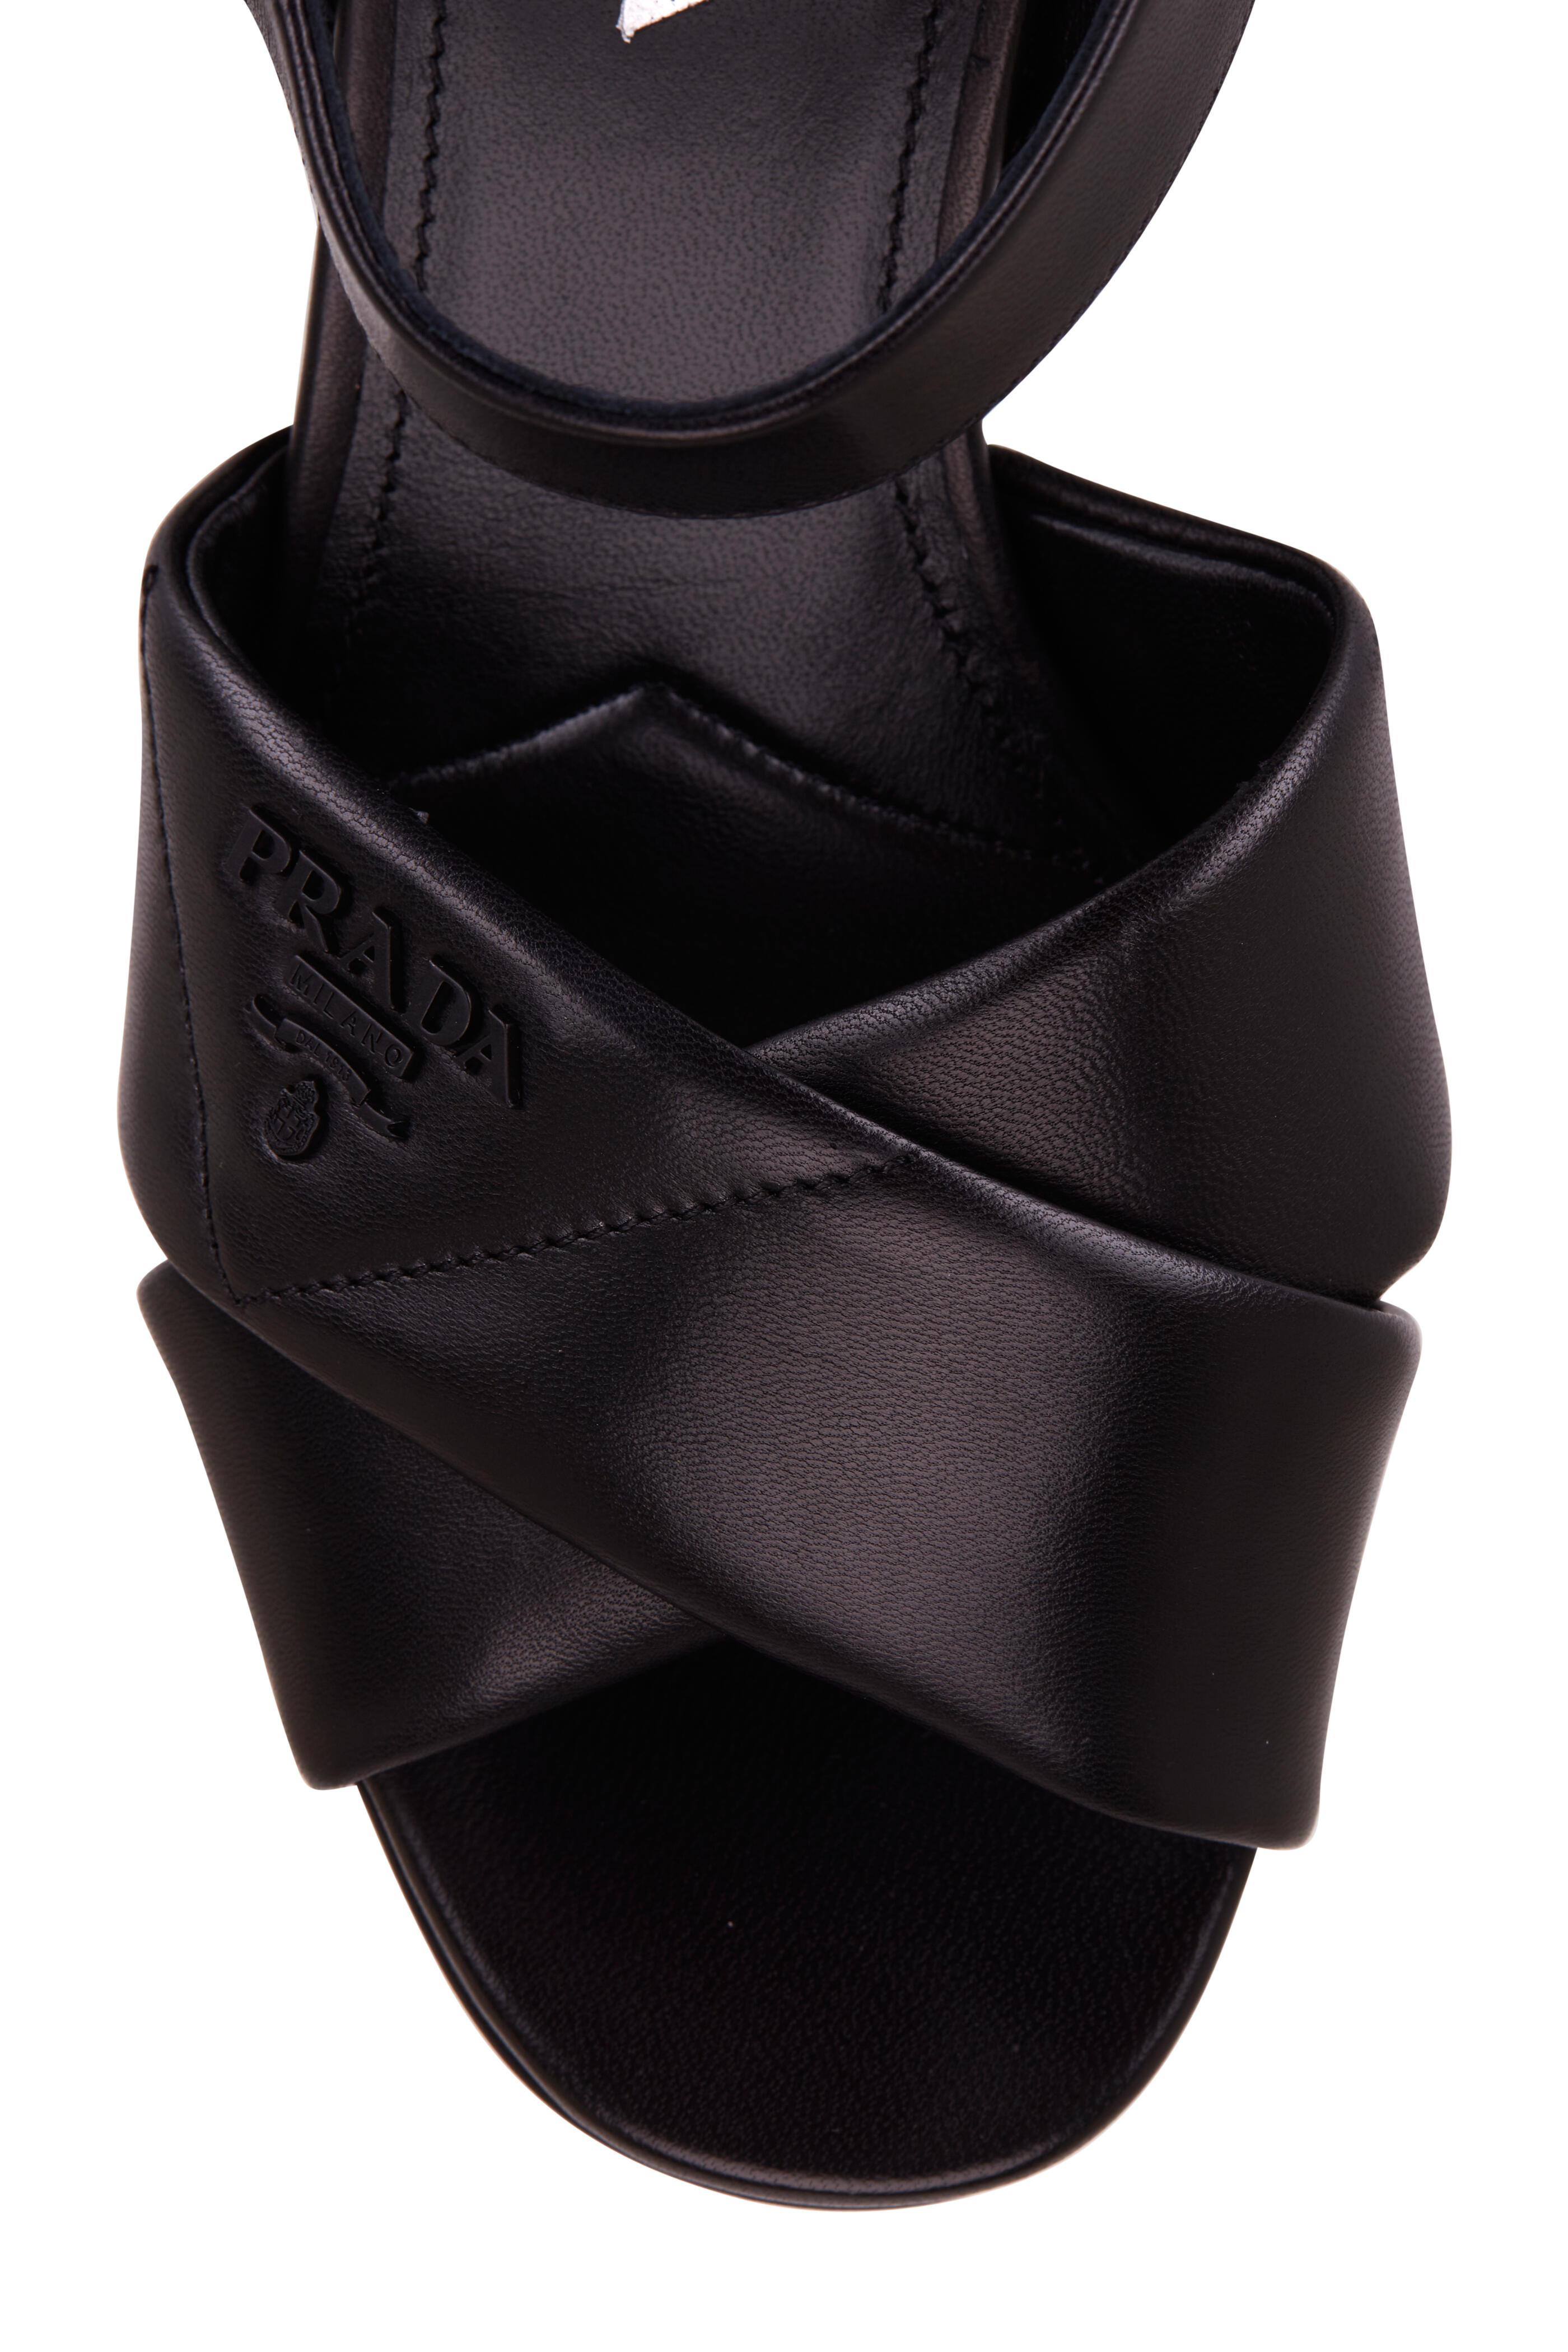 Prada - Black Nappa Leather Platform Sandal, 85mm